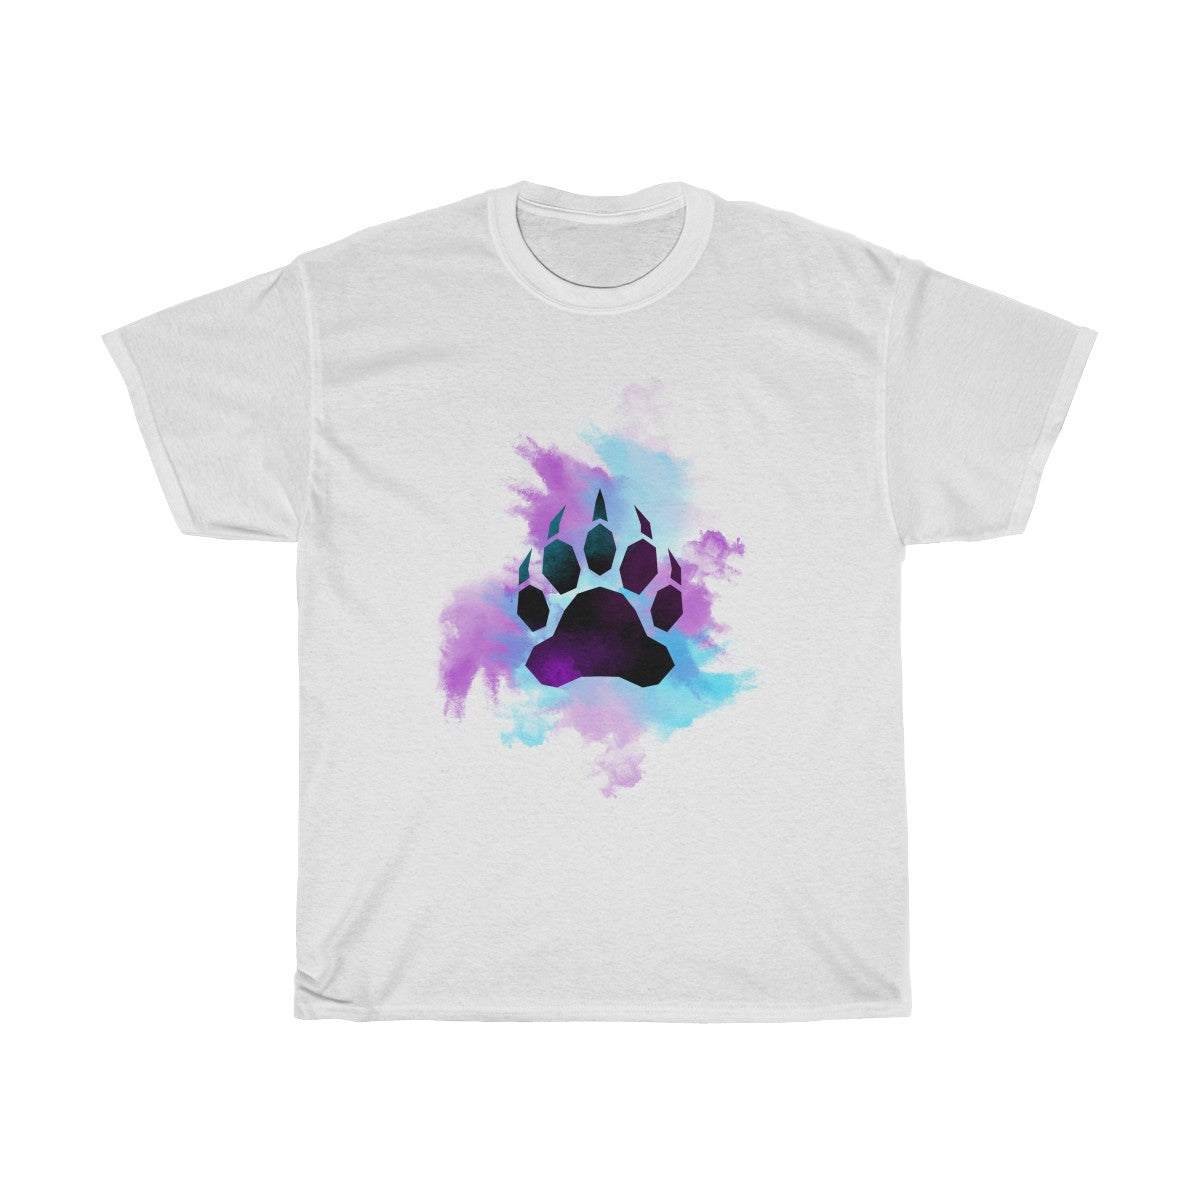 Splotch Bear - T-Shirt T-Shirt Wexon White S 